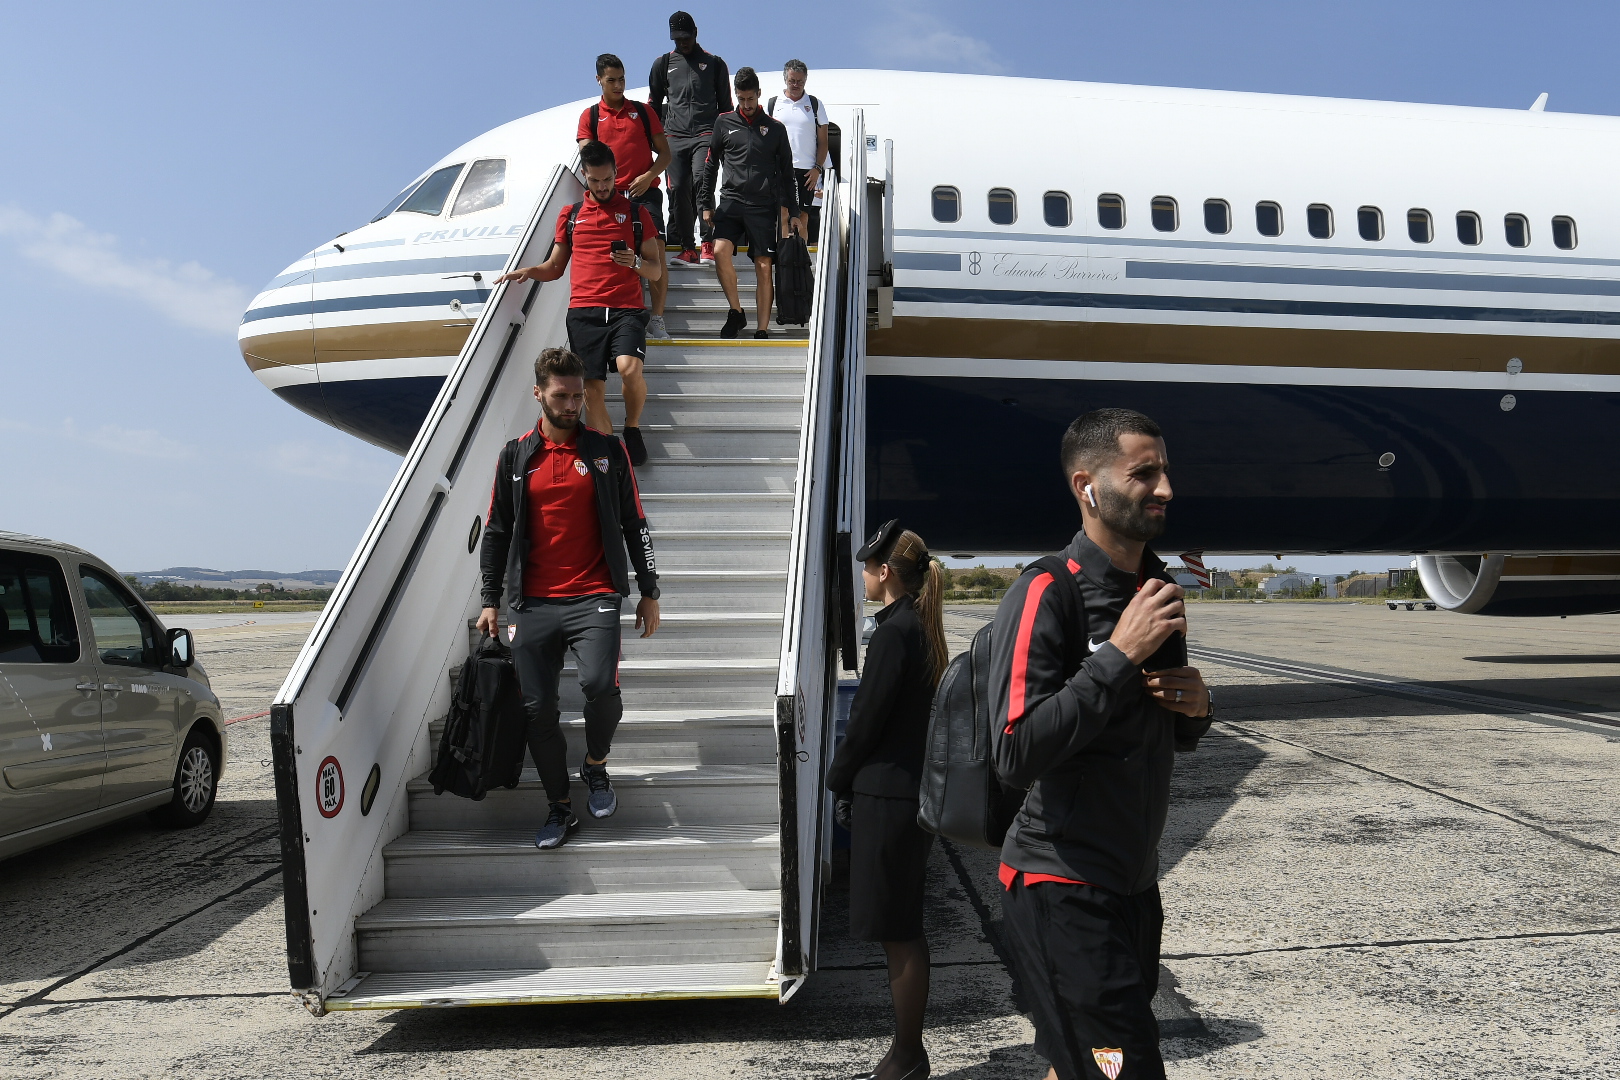 Sevilla arrive at Brno Airport